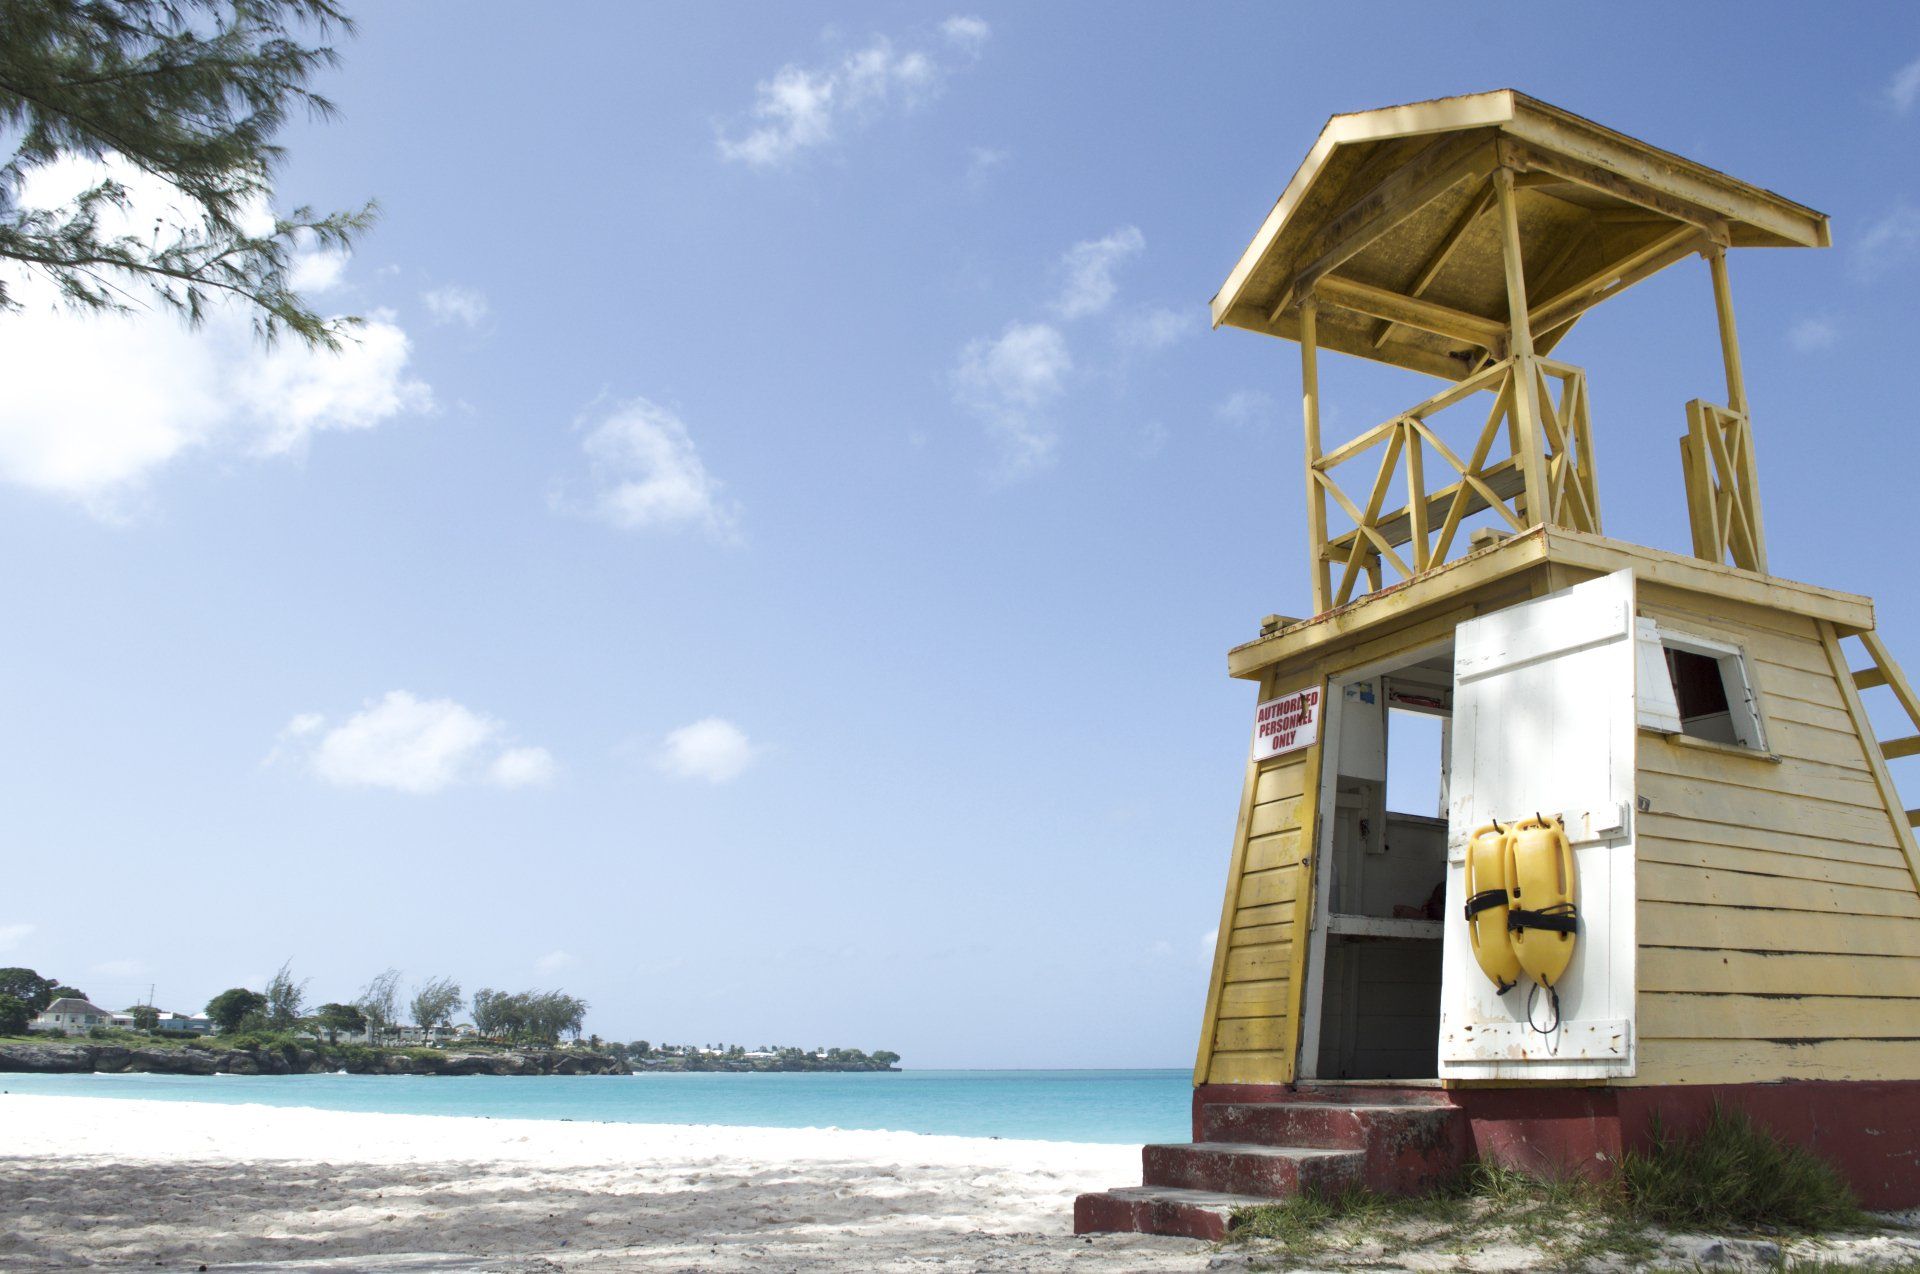 A lifeguard tower sits on the beach near the ocean